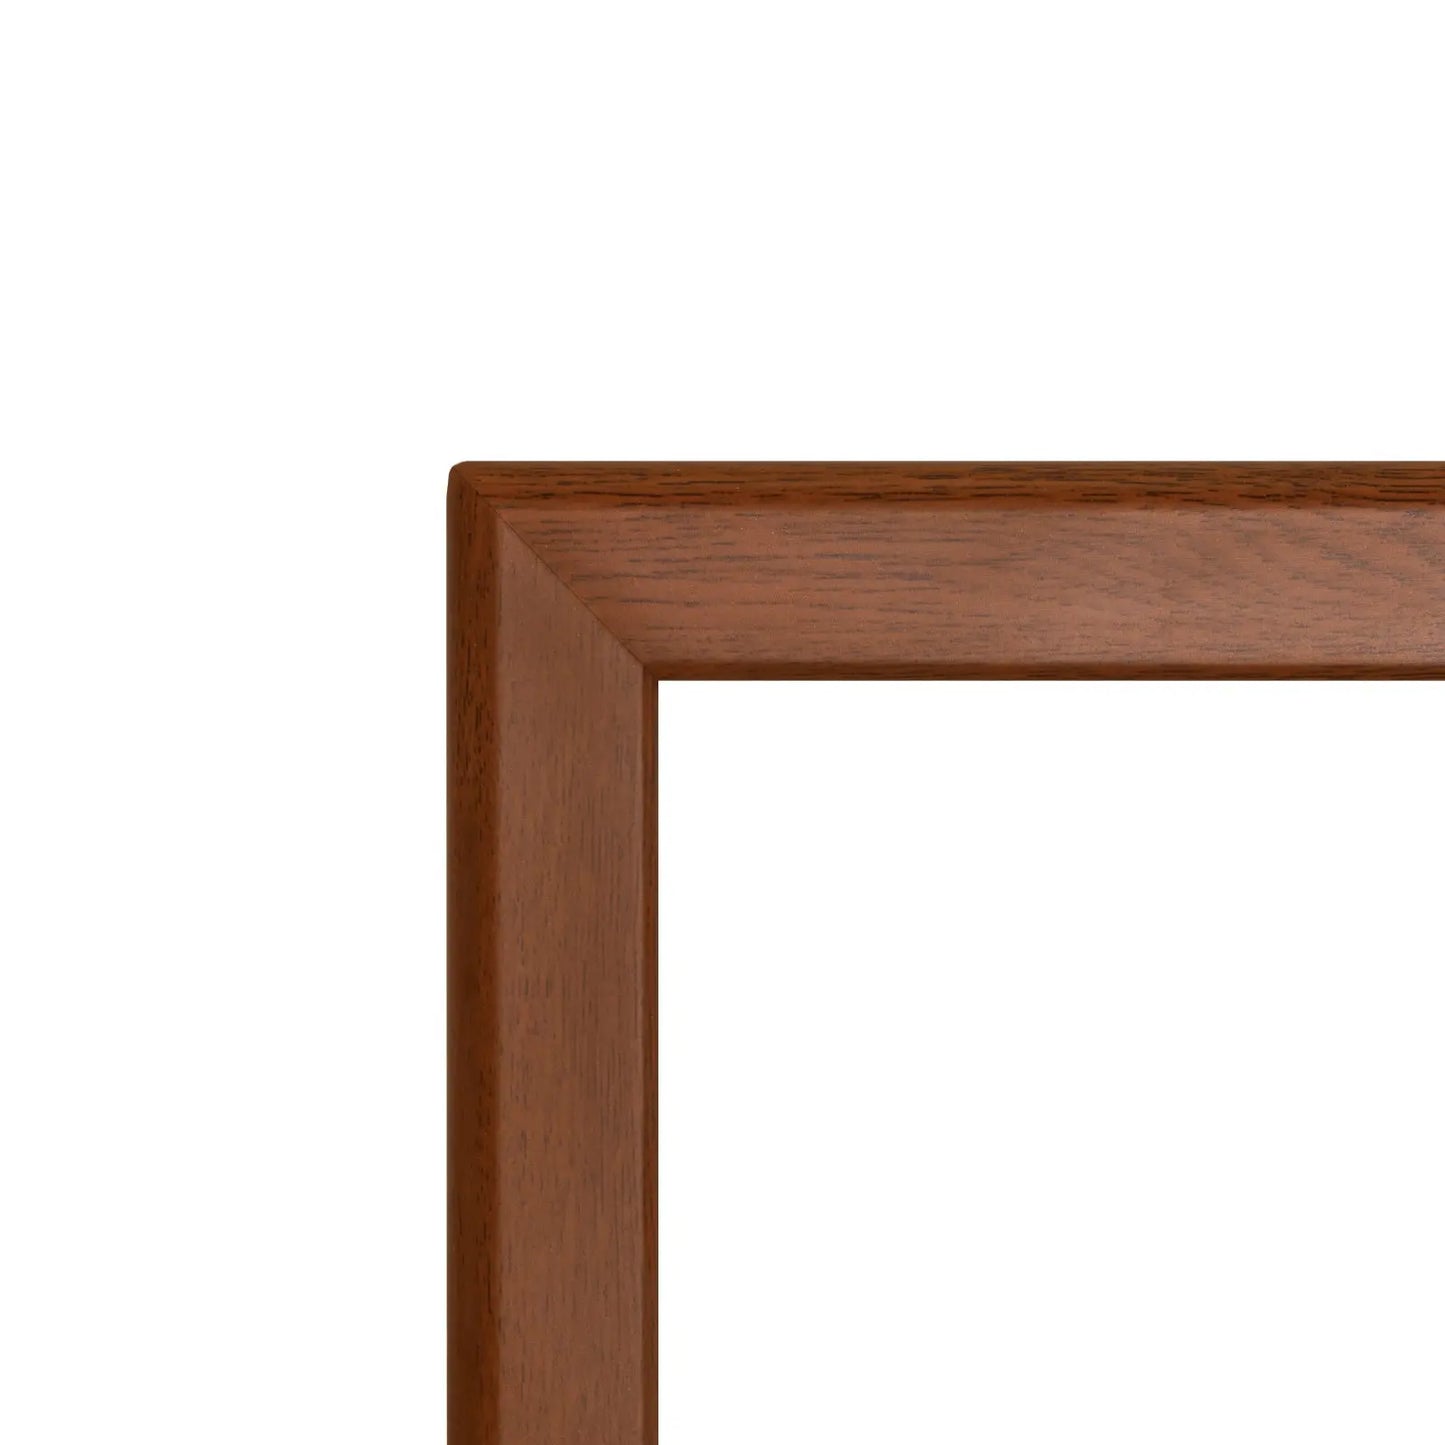 30x40 Dark Wood SnapeZo® Snap Frame - 1.25" Profile - Snap Frames Direct